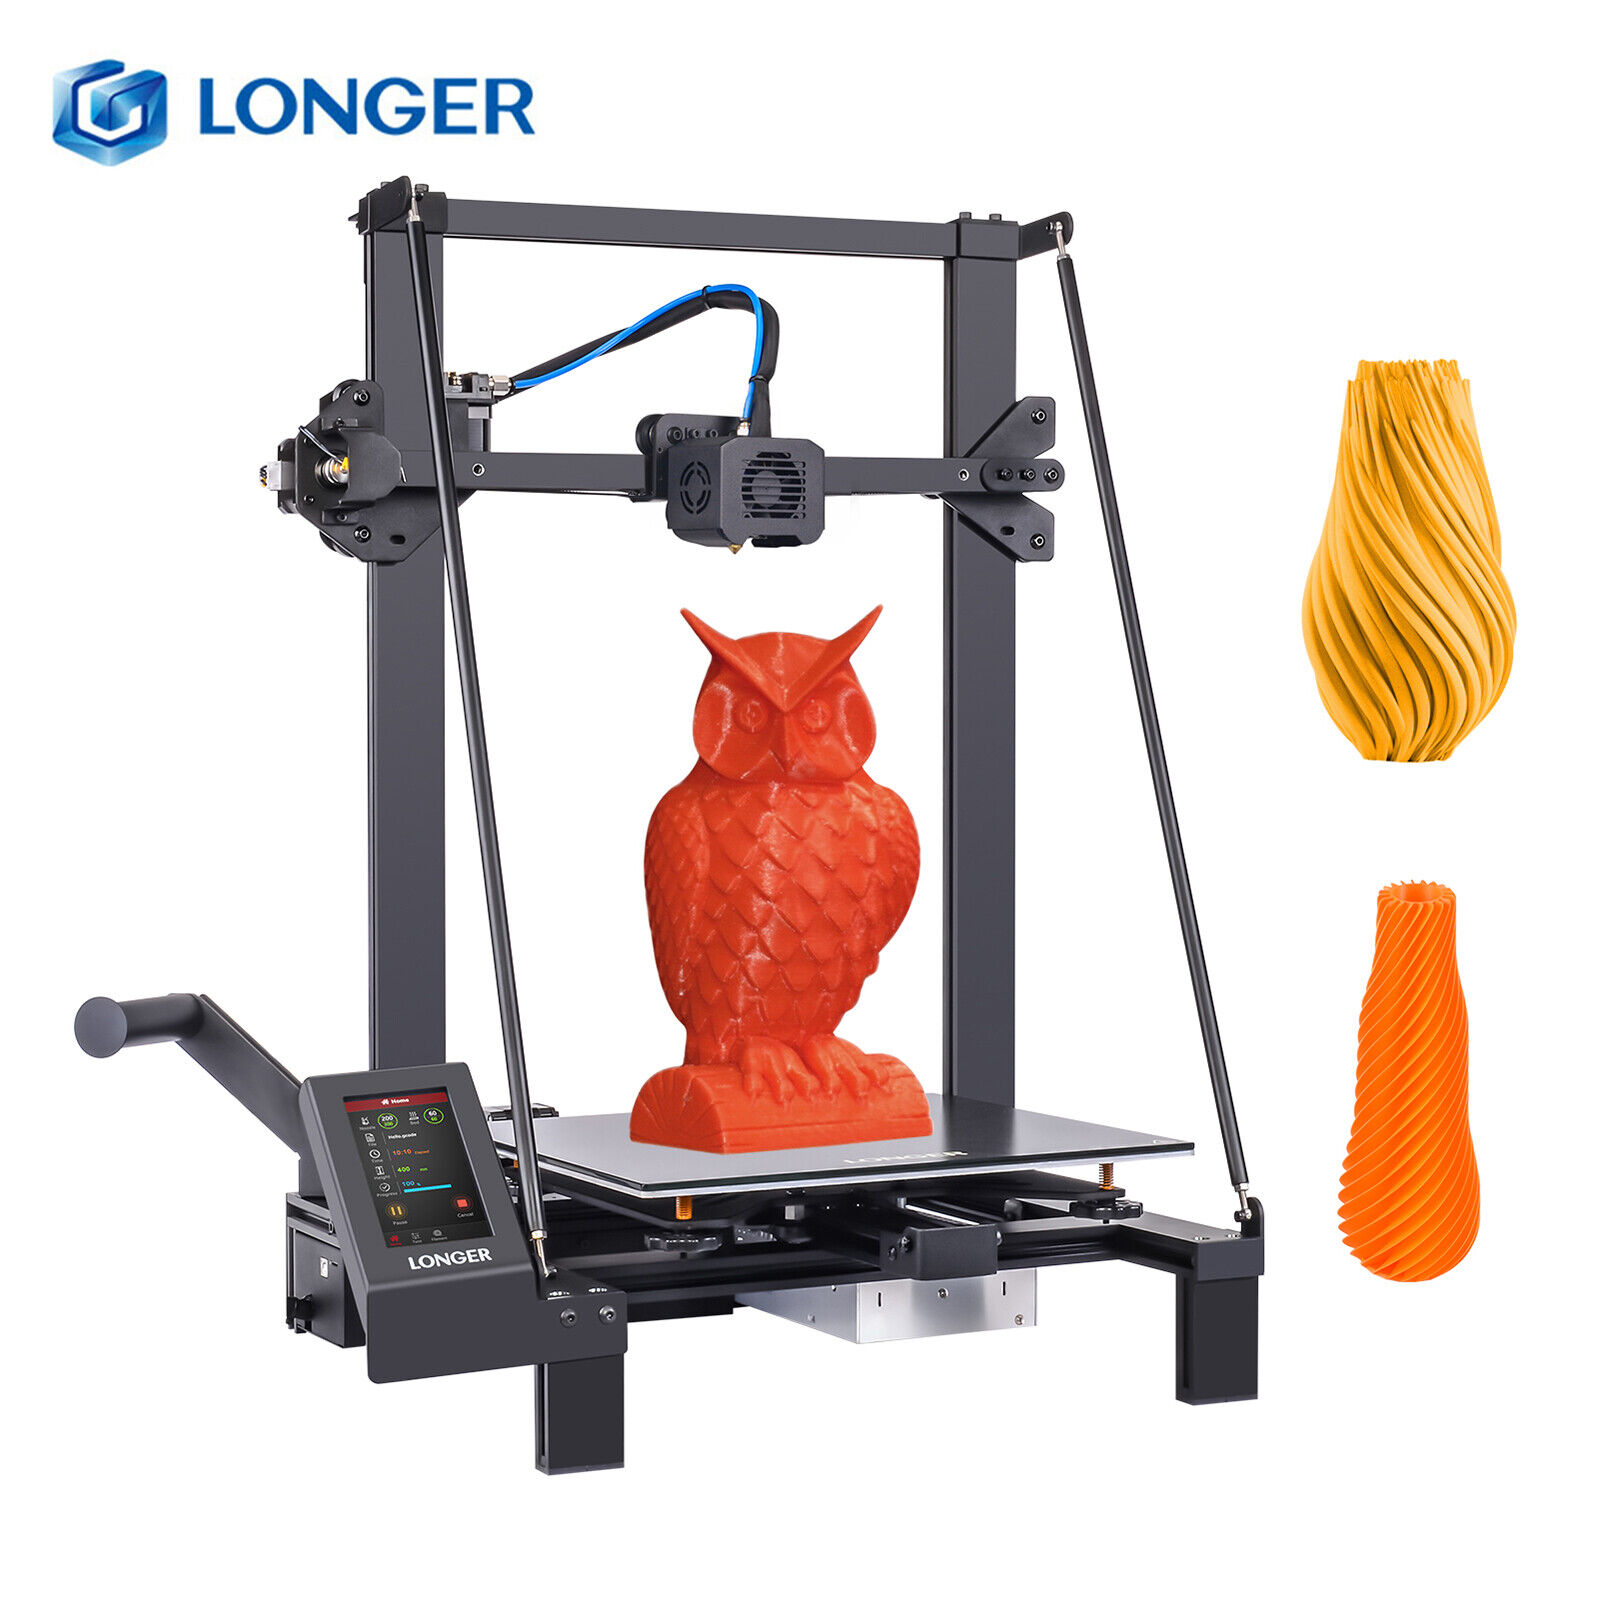 Longer Upgraded LK5 Pro 3D Printer Large Print Size 300x300x400mm Open Source